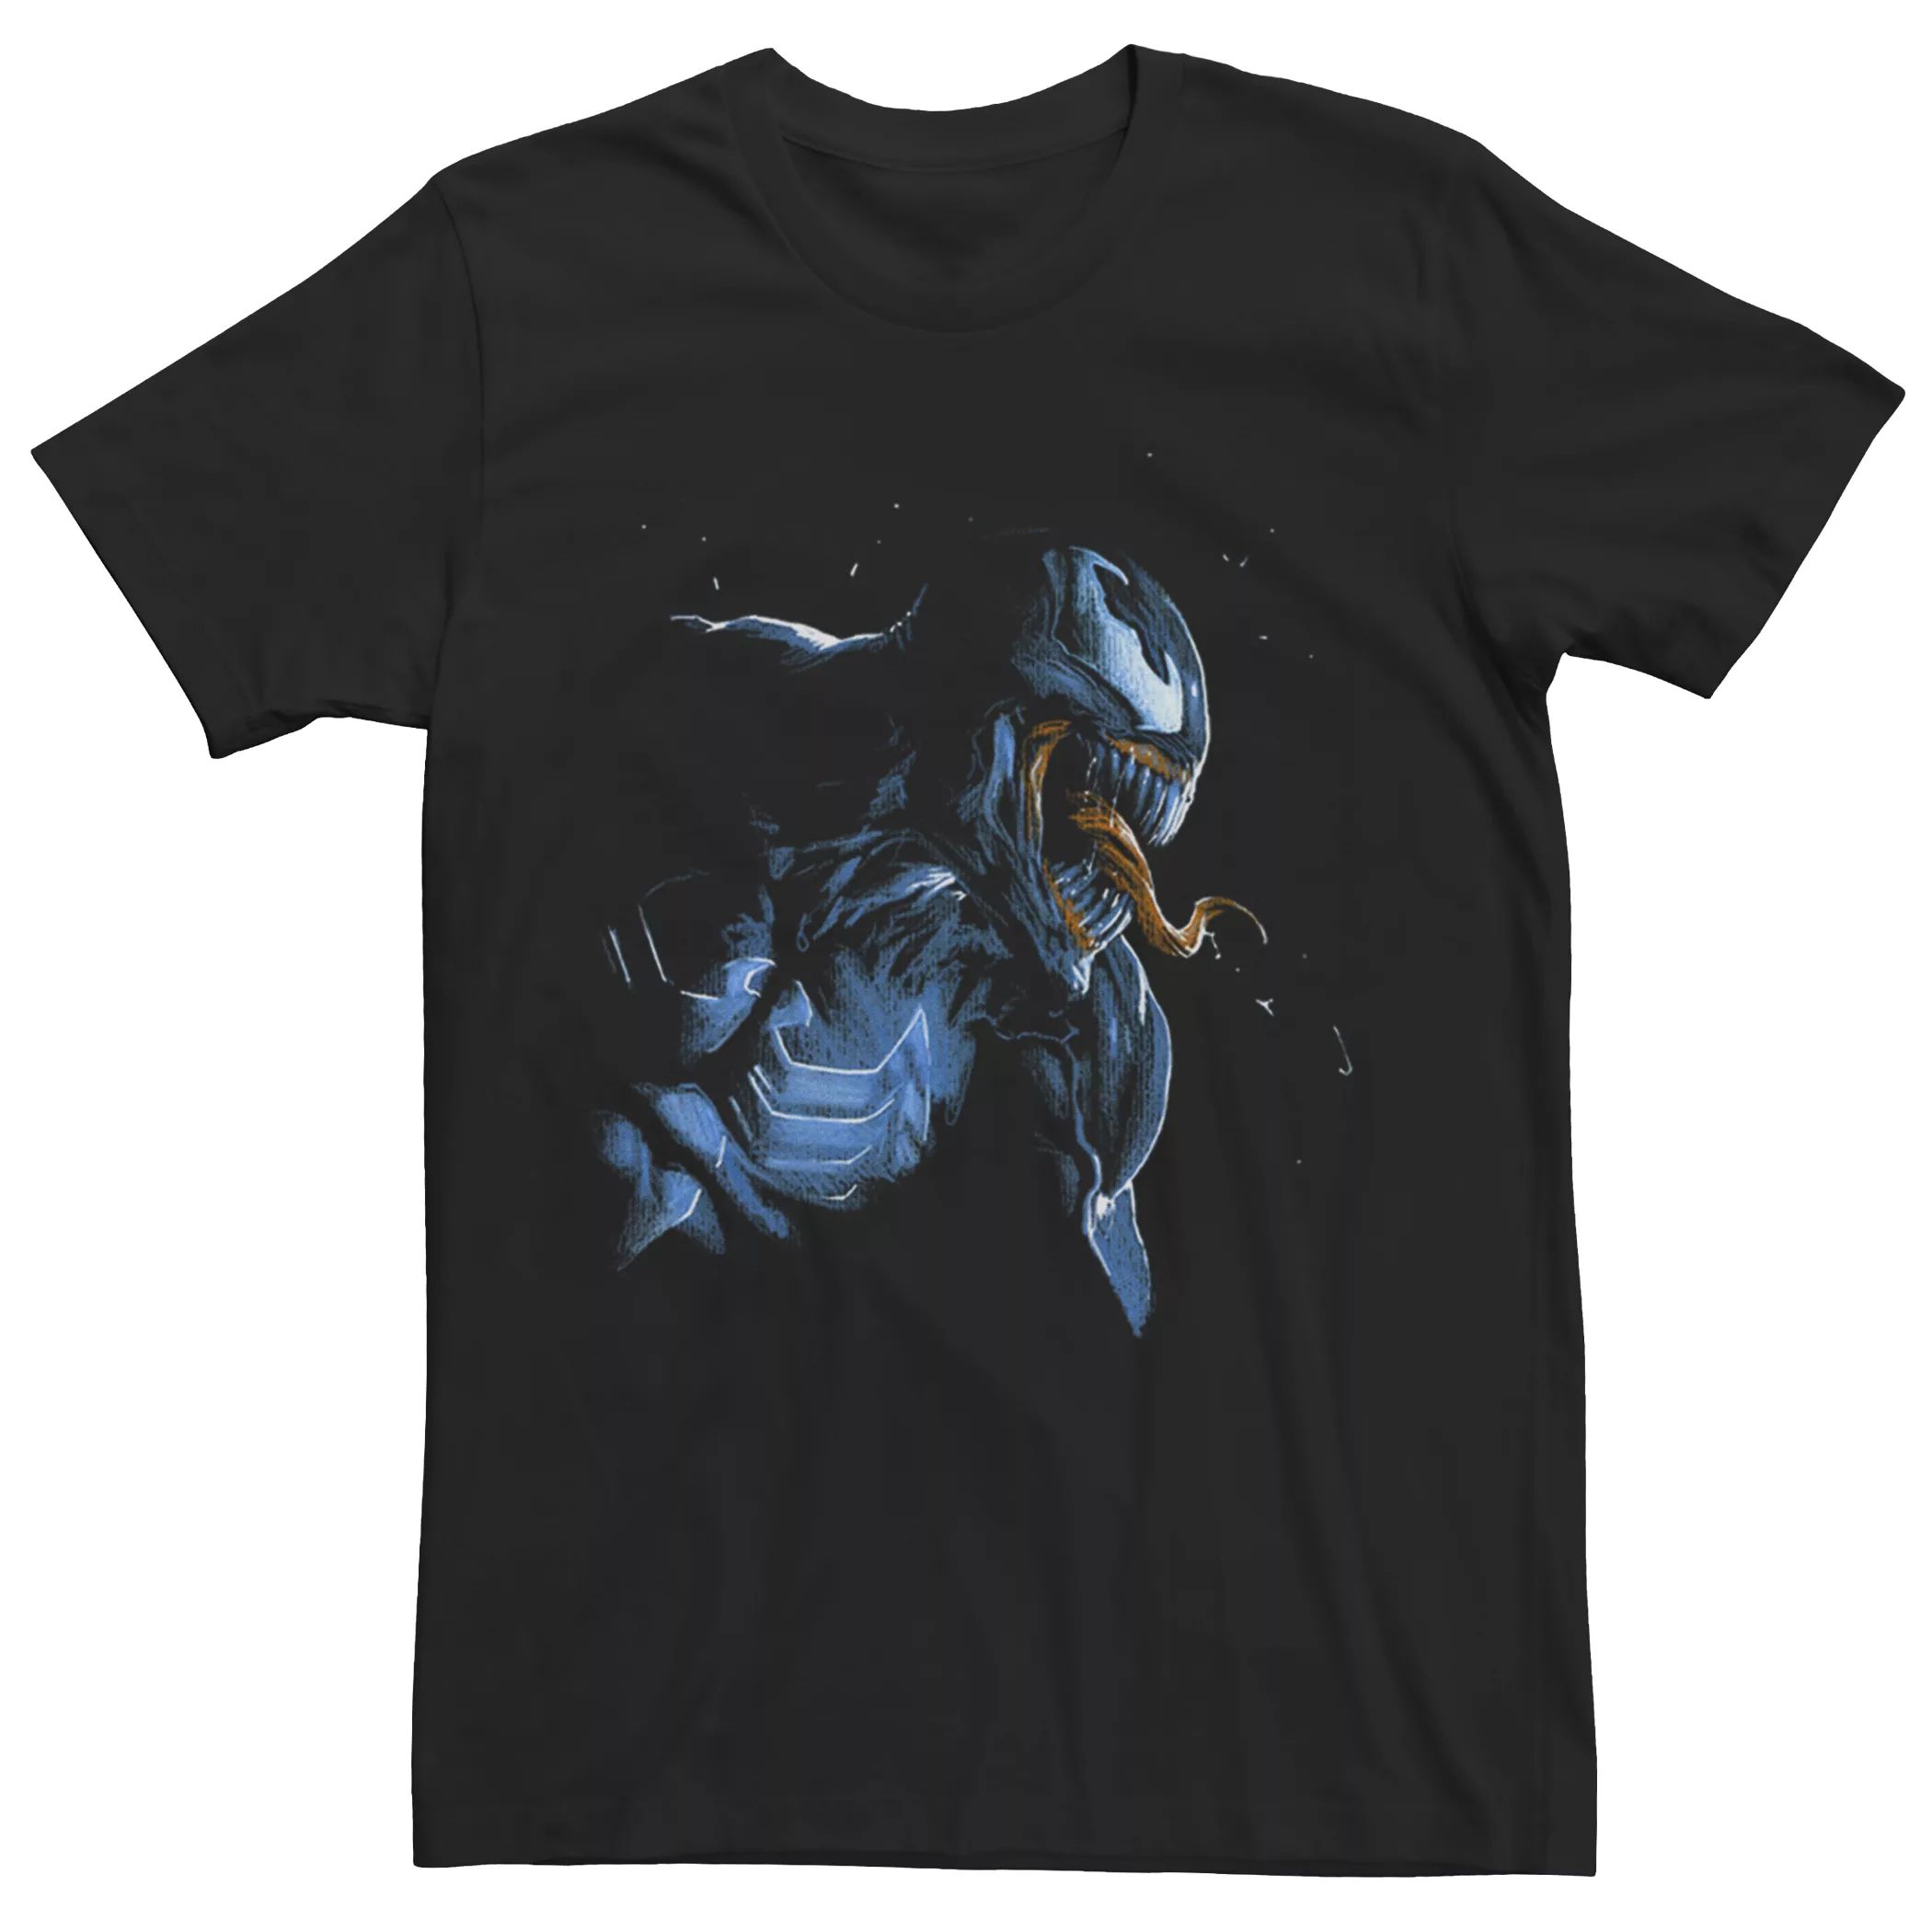 Мужская футболка с рисунком Marvel Venom Licensed Character